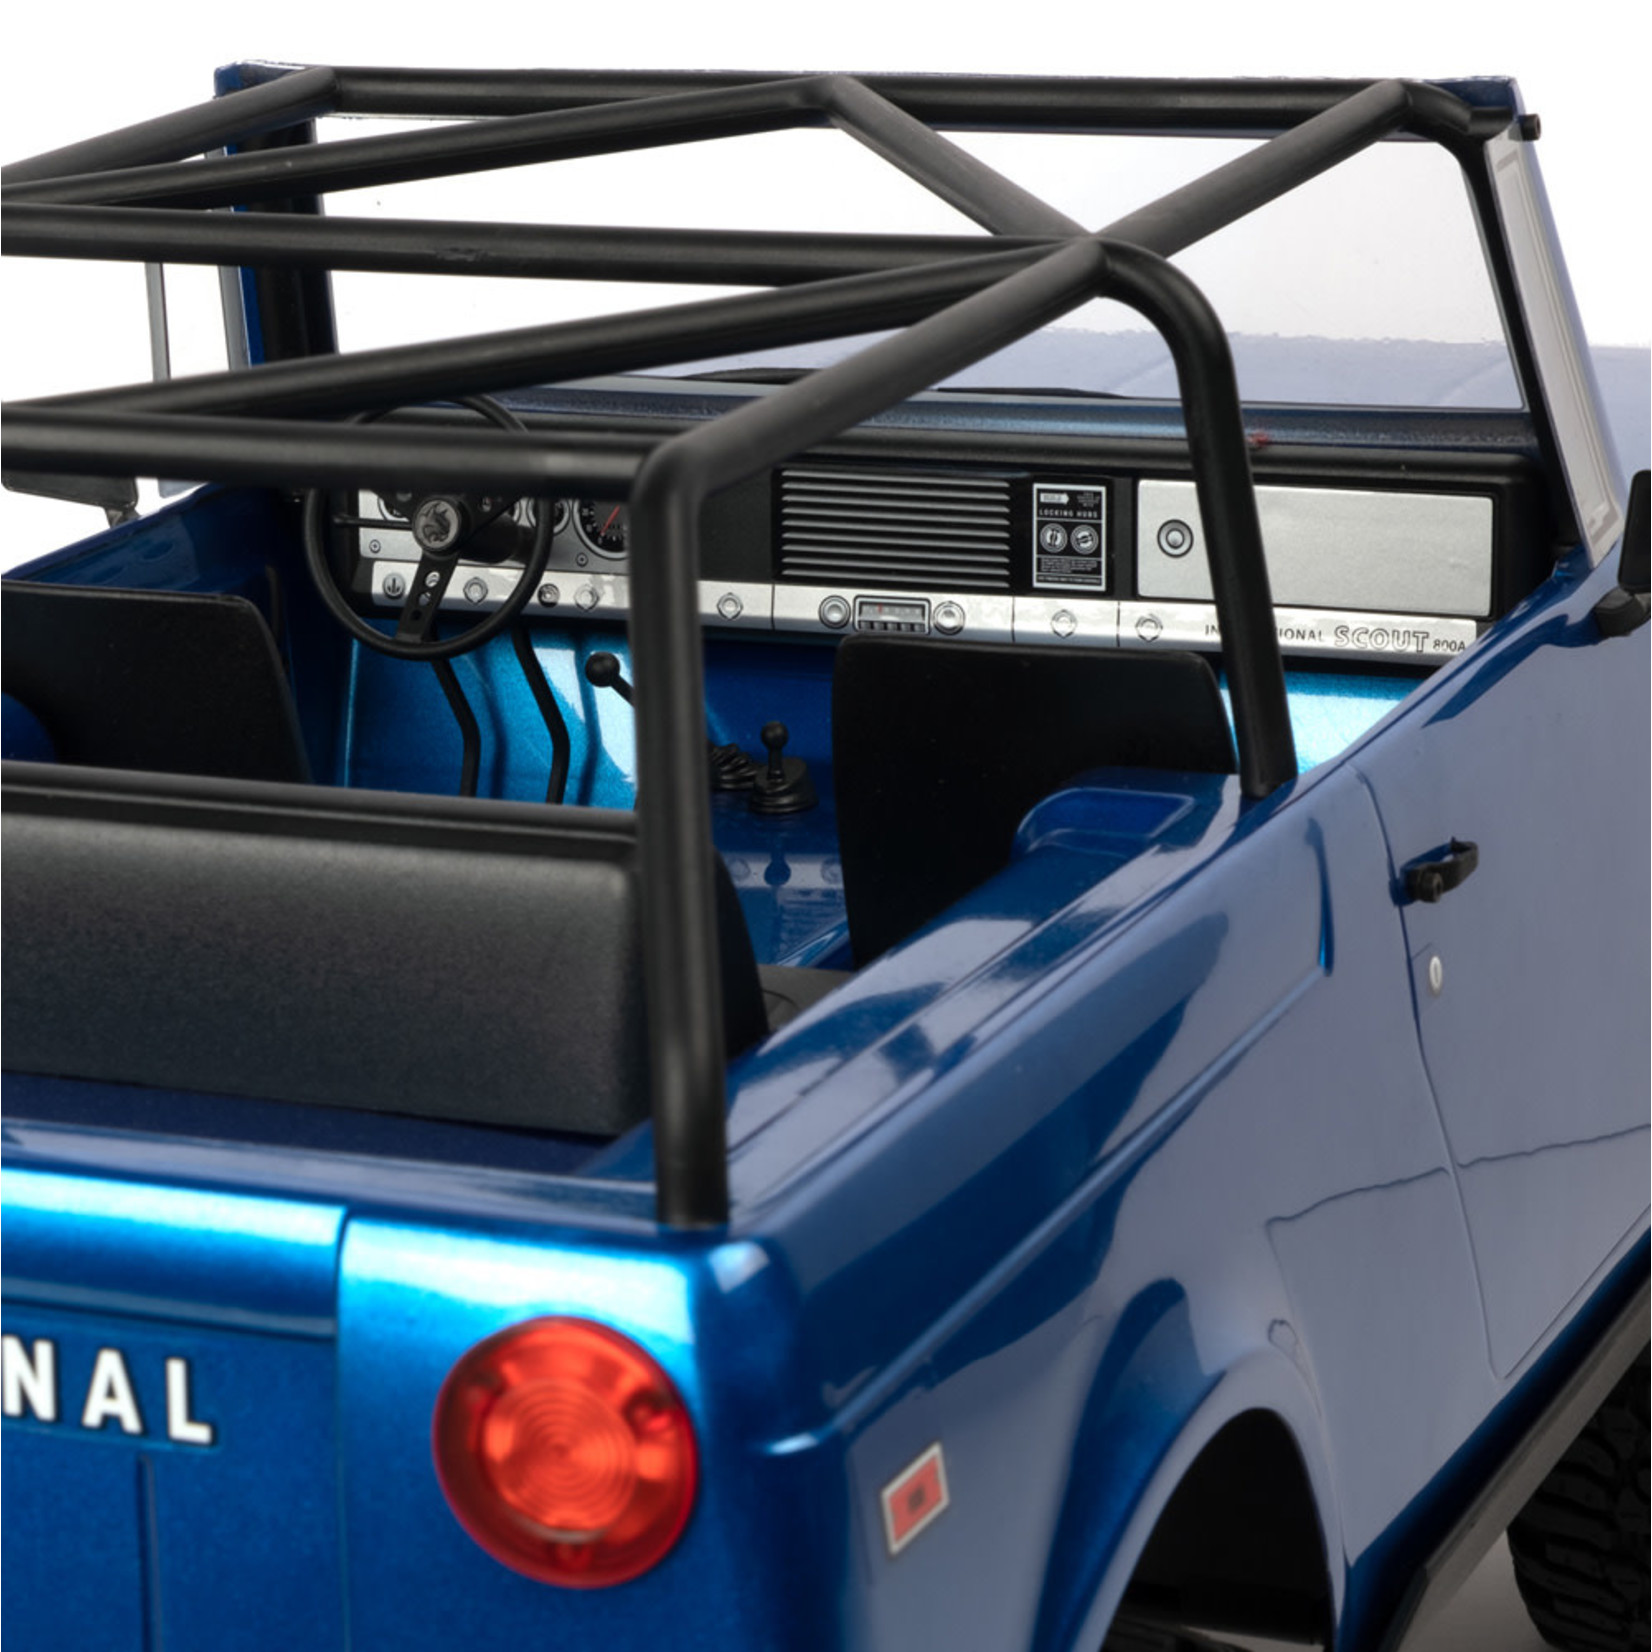 Redcat Racing Redcat Gen9 Scout 800A 1/10 4WD RTR Scale Rock Crawler (Blue) w/2.4GHz Radio #GEN9-BLUE